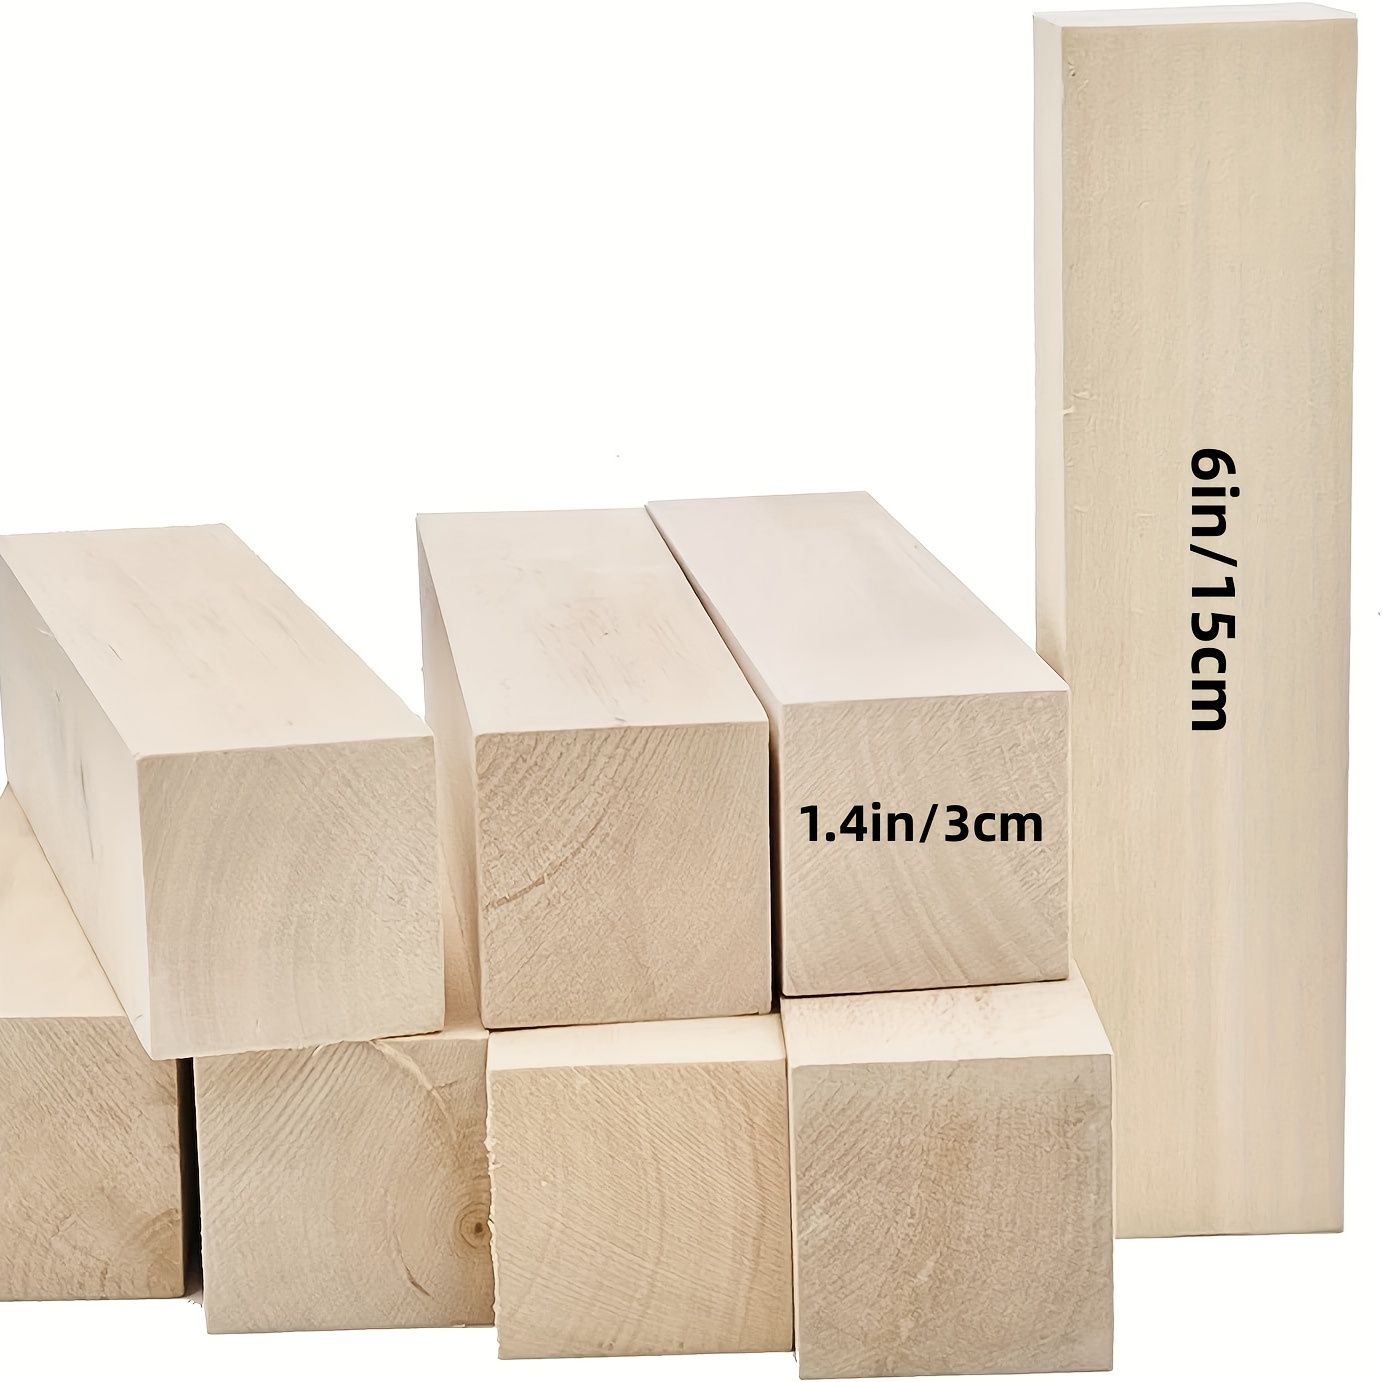 5 Pcs Carving Wood Blocks Whittling Wood Blocks Basswood Carving Blocks  Unfinished Set for Carving Beginners